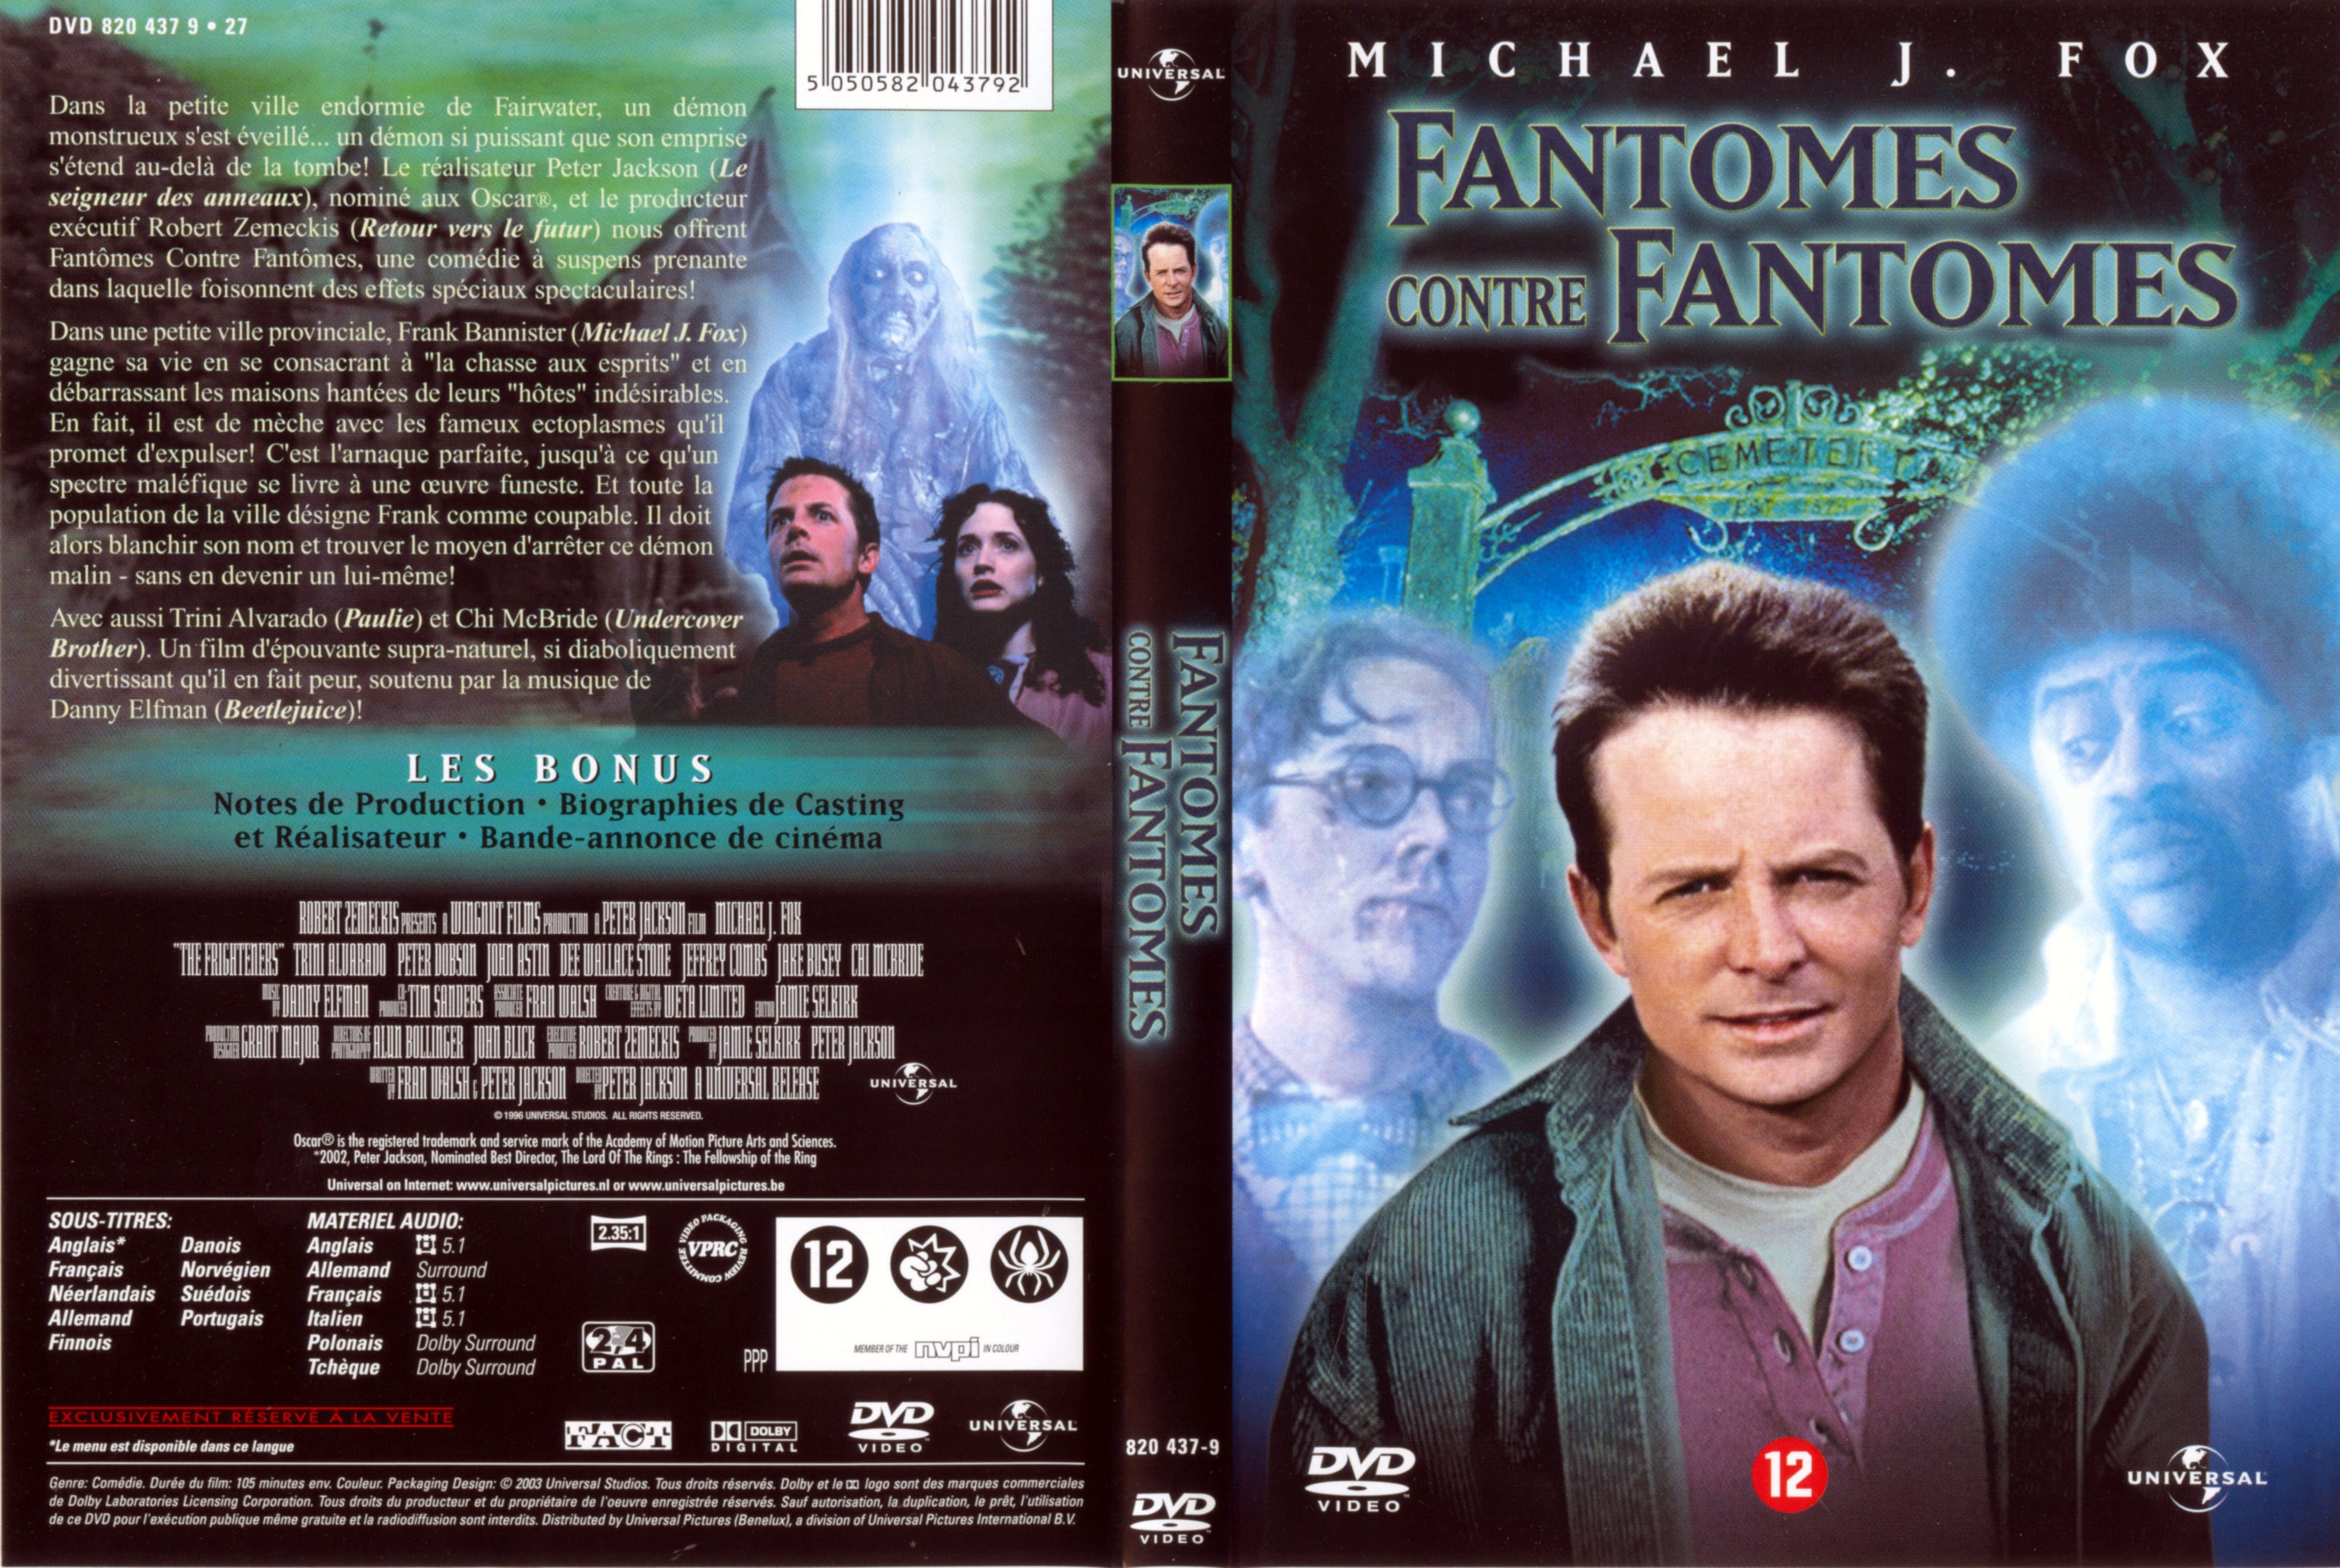 Jaquette DVD Fantomes contre fantomes v2